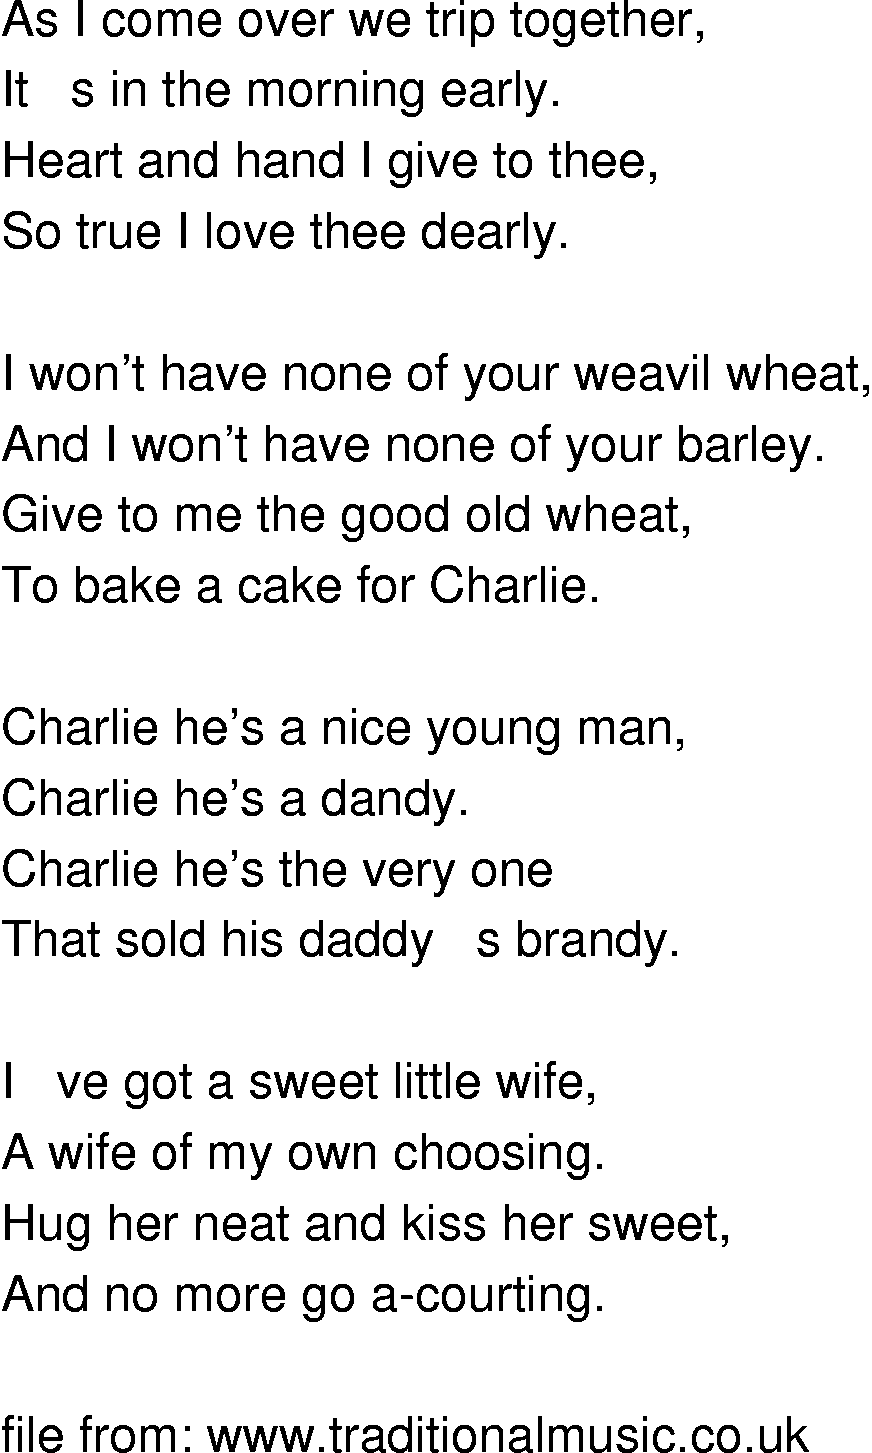 Old-Time (oldtimey) Song Lyrics - charlies sweet